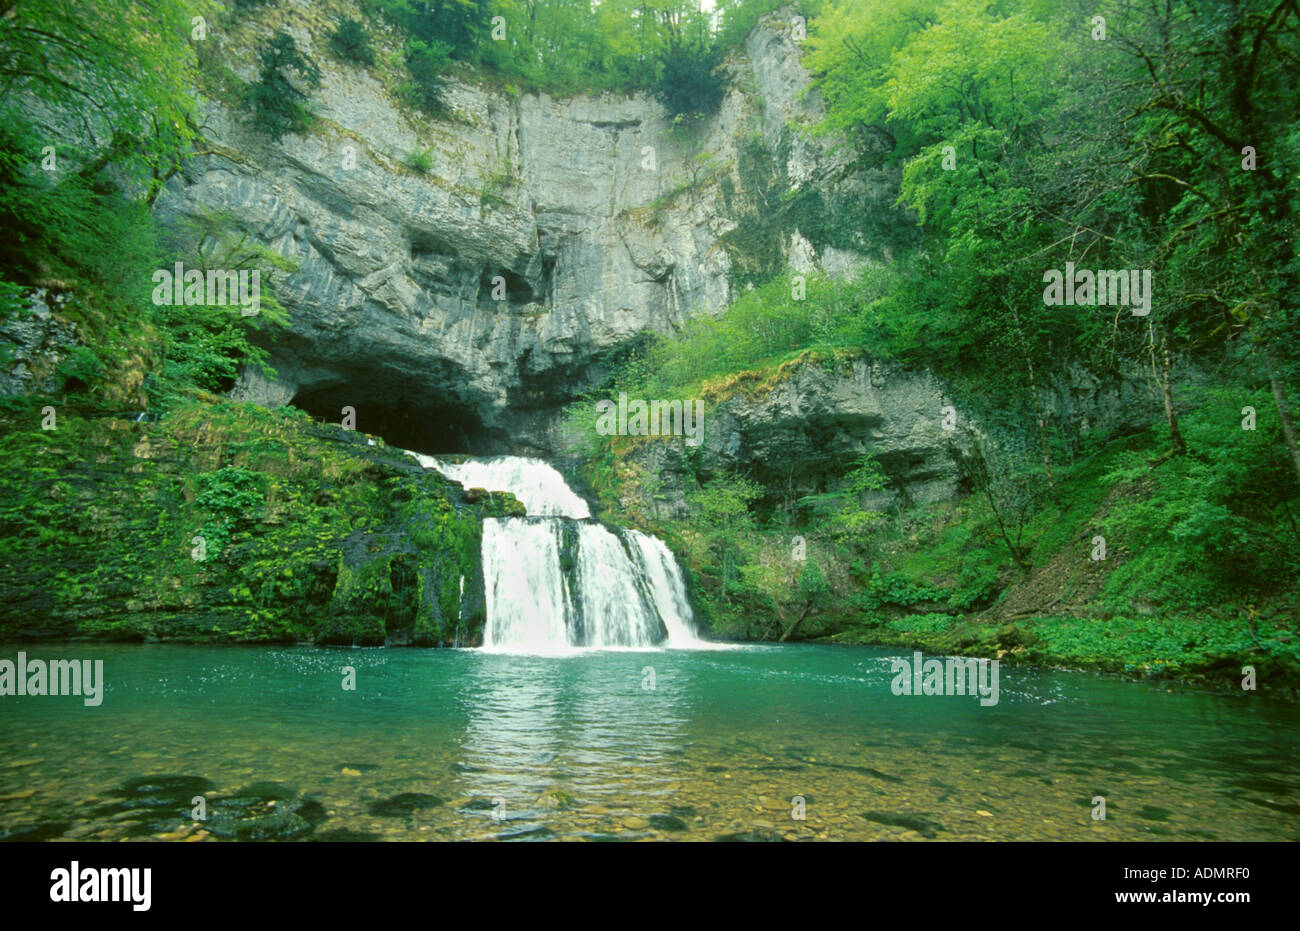 Grotta, Source de Lison, ingresso di effluente grotta con cascata, Francia, Doubs Foto Stock